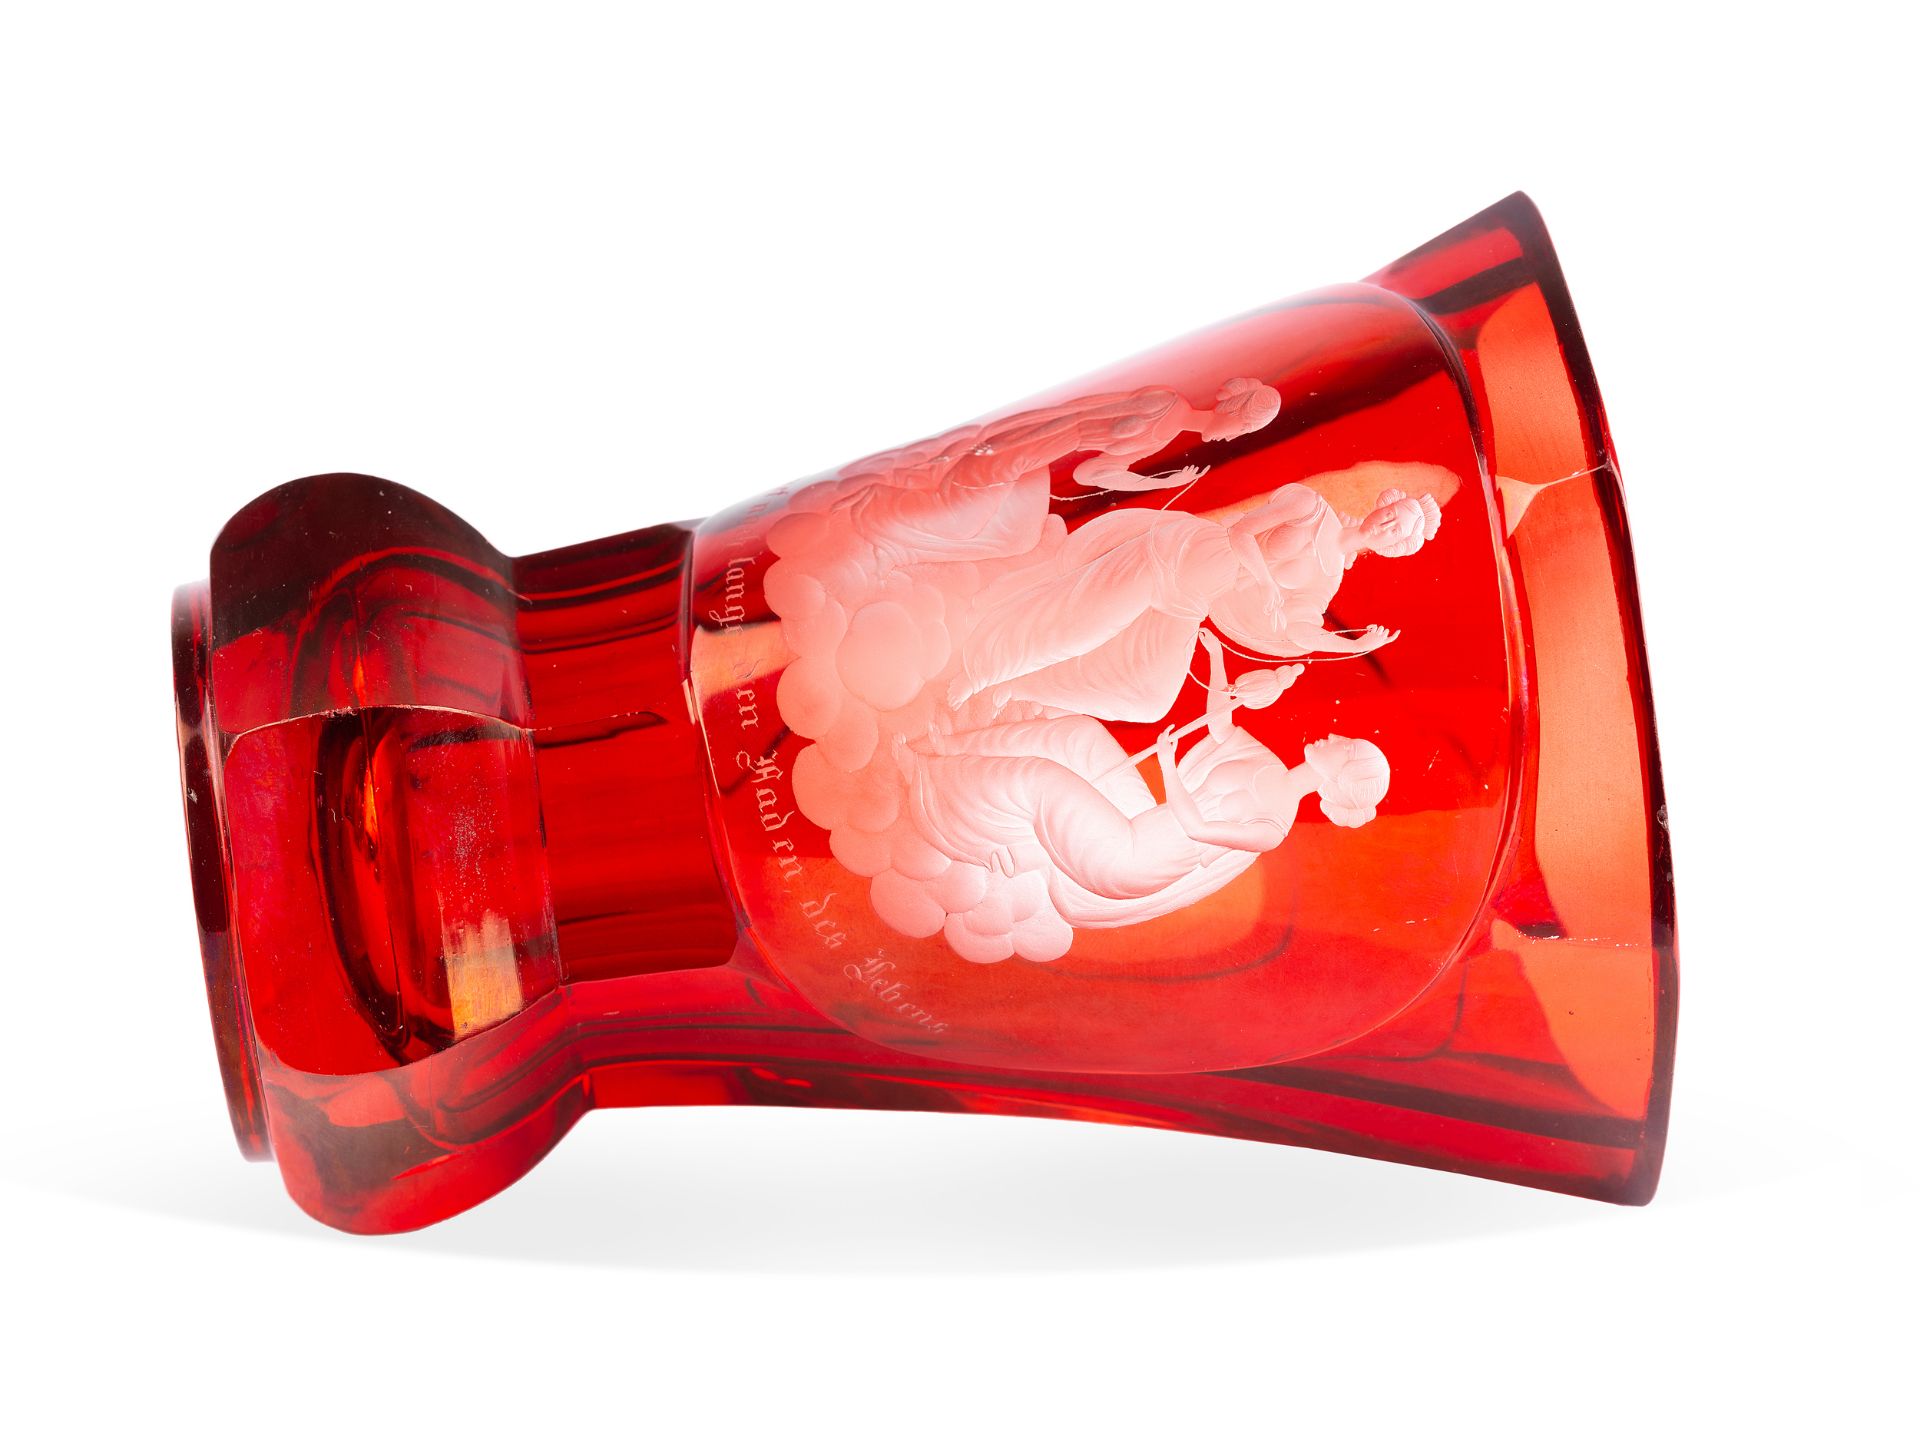 Biedermeier Glass with Goddesses of Fate (Moiren/Parzen), Red glass - Image 4 of 4